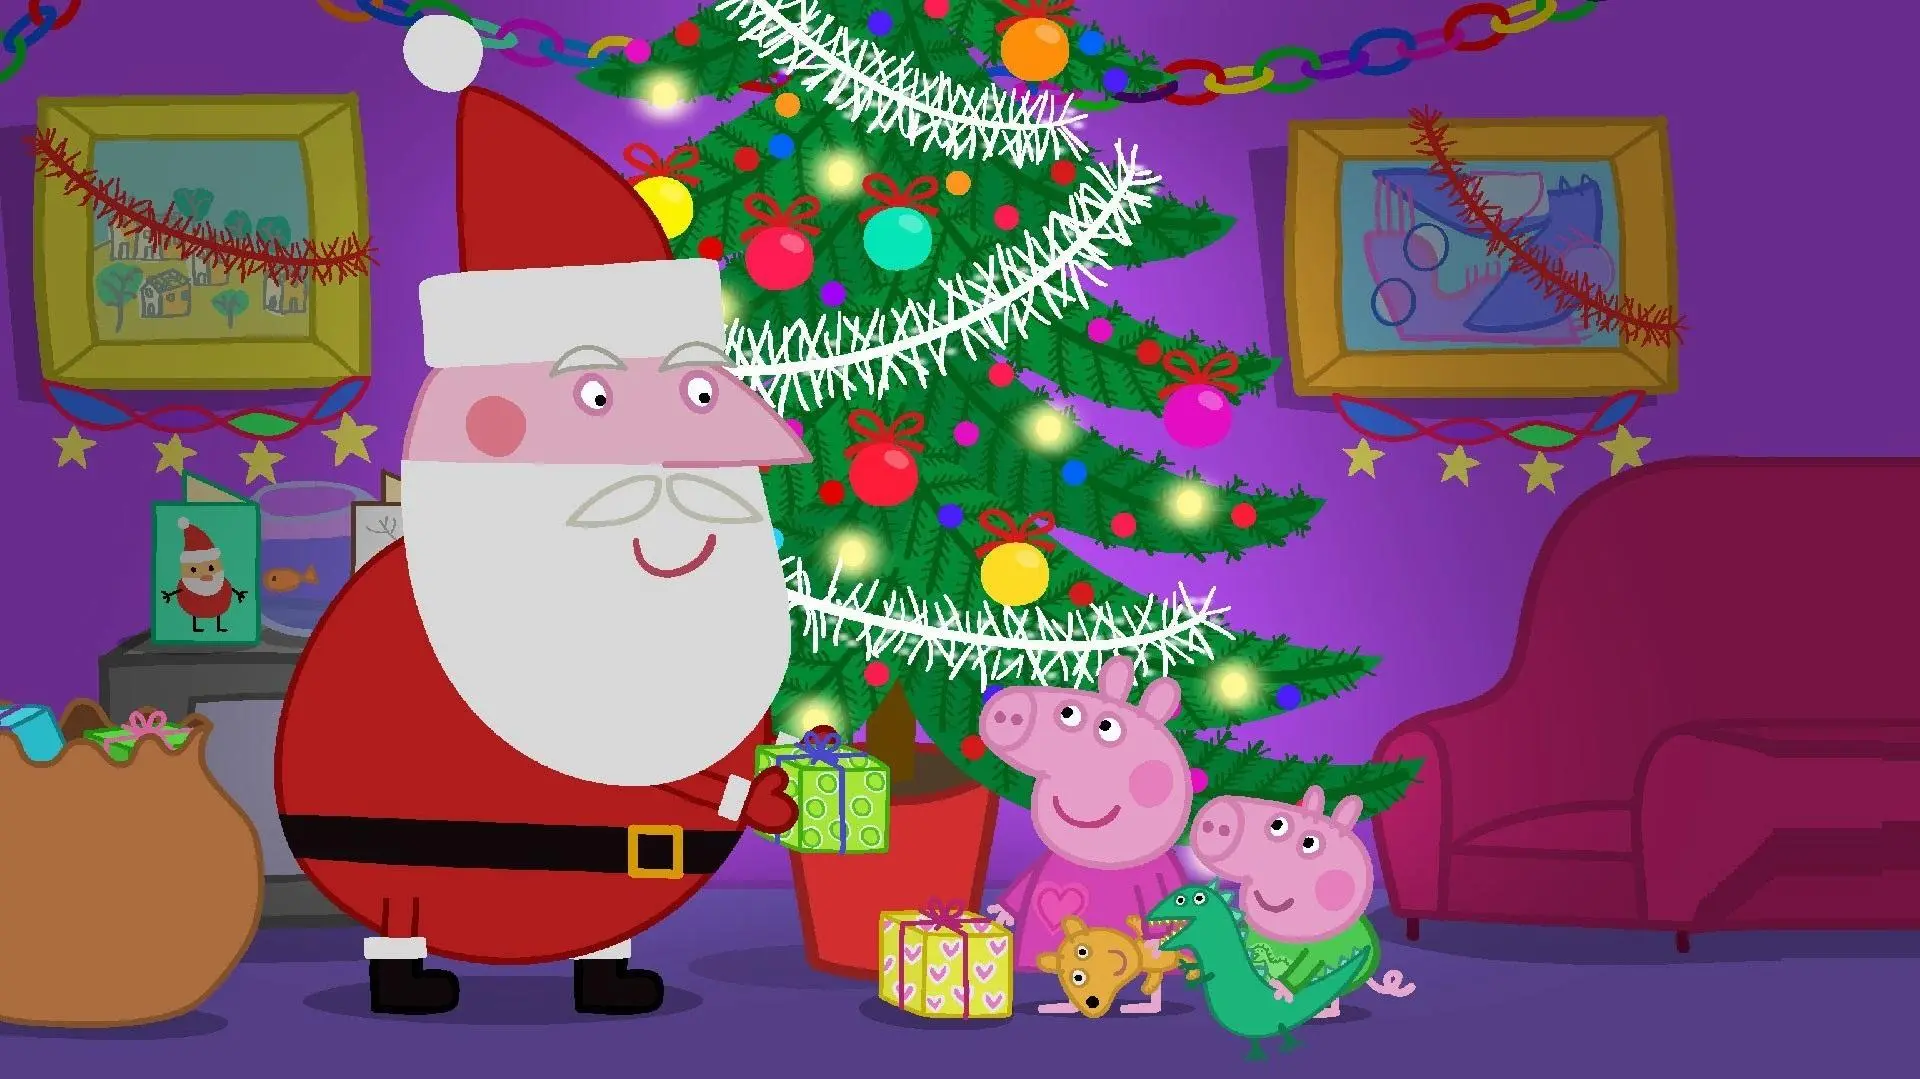 Peppa Pig: Peppa's Christmas_peliplat